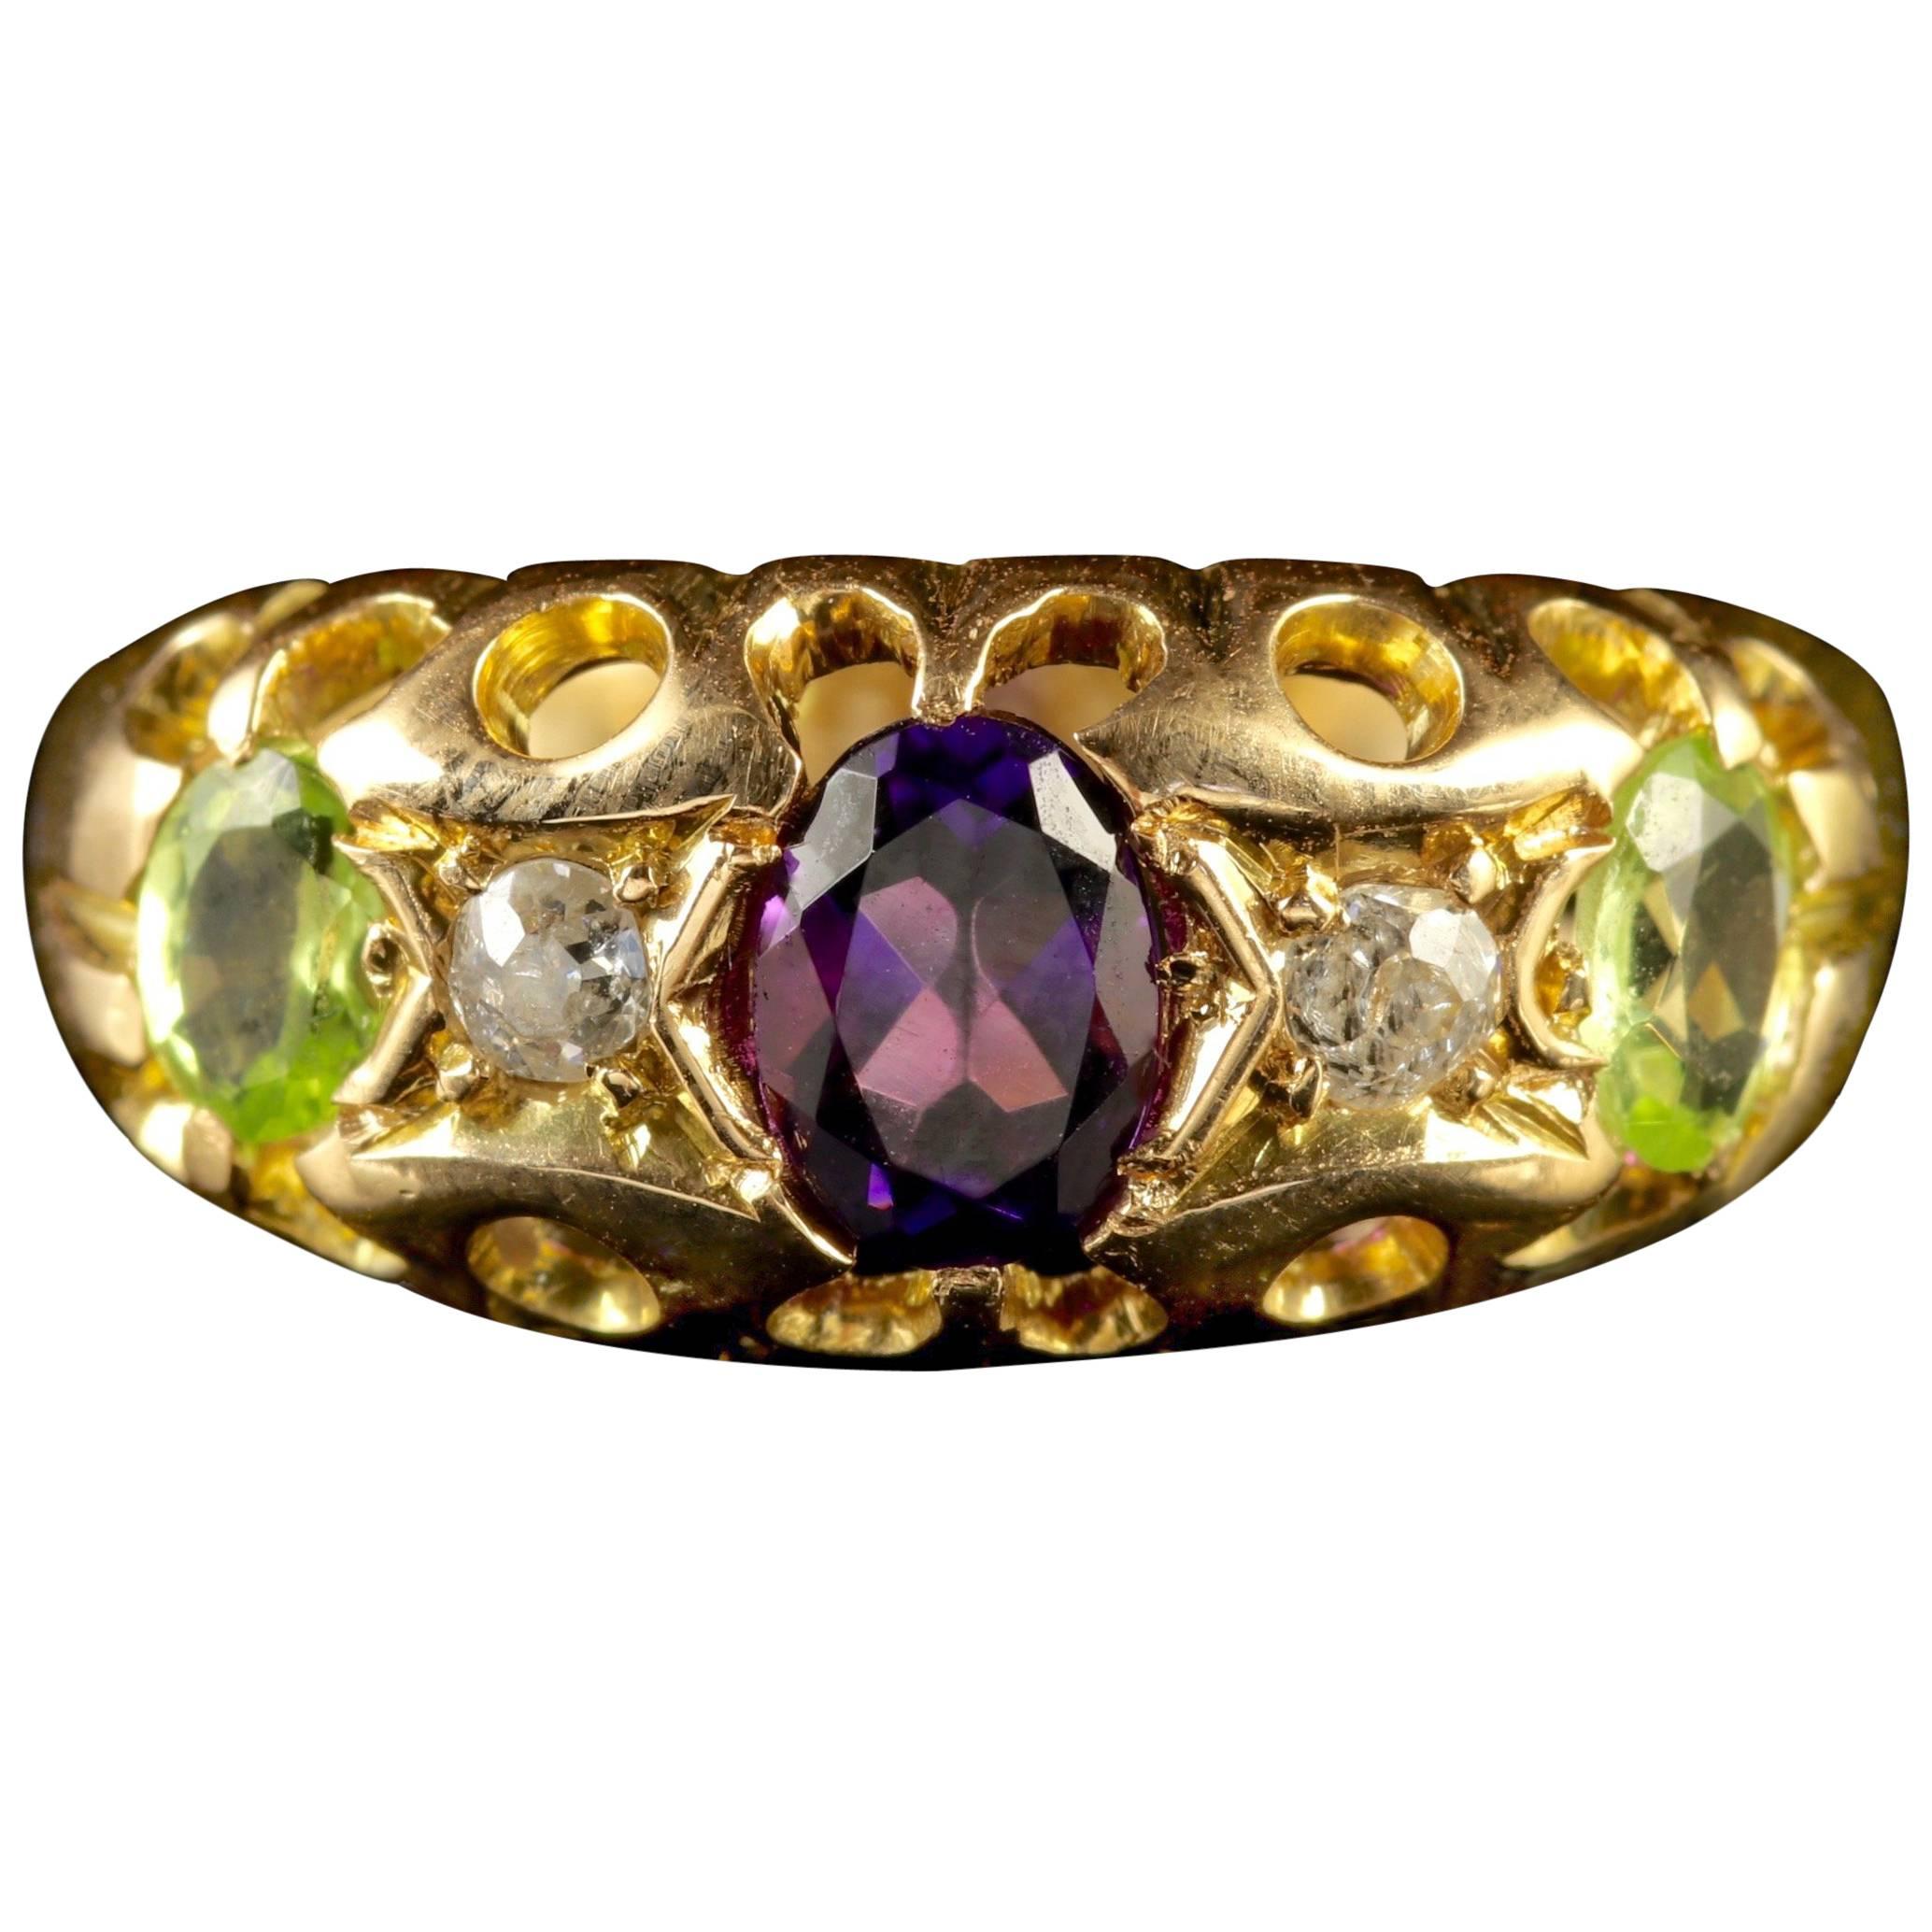 Antique 18 Carat Gold Victorian Suffragette Ring, circa 1900